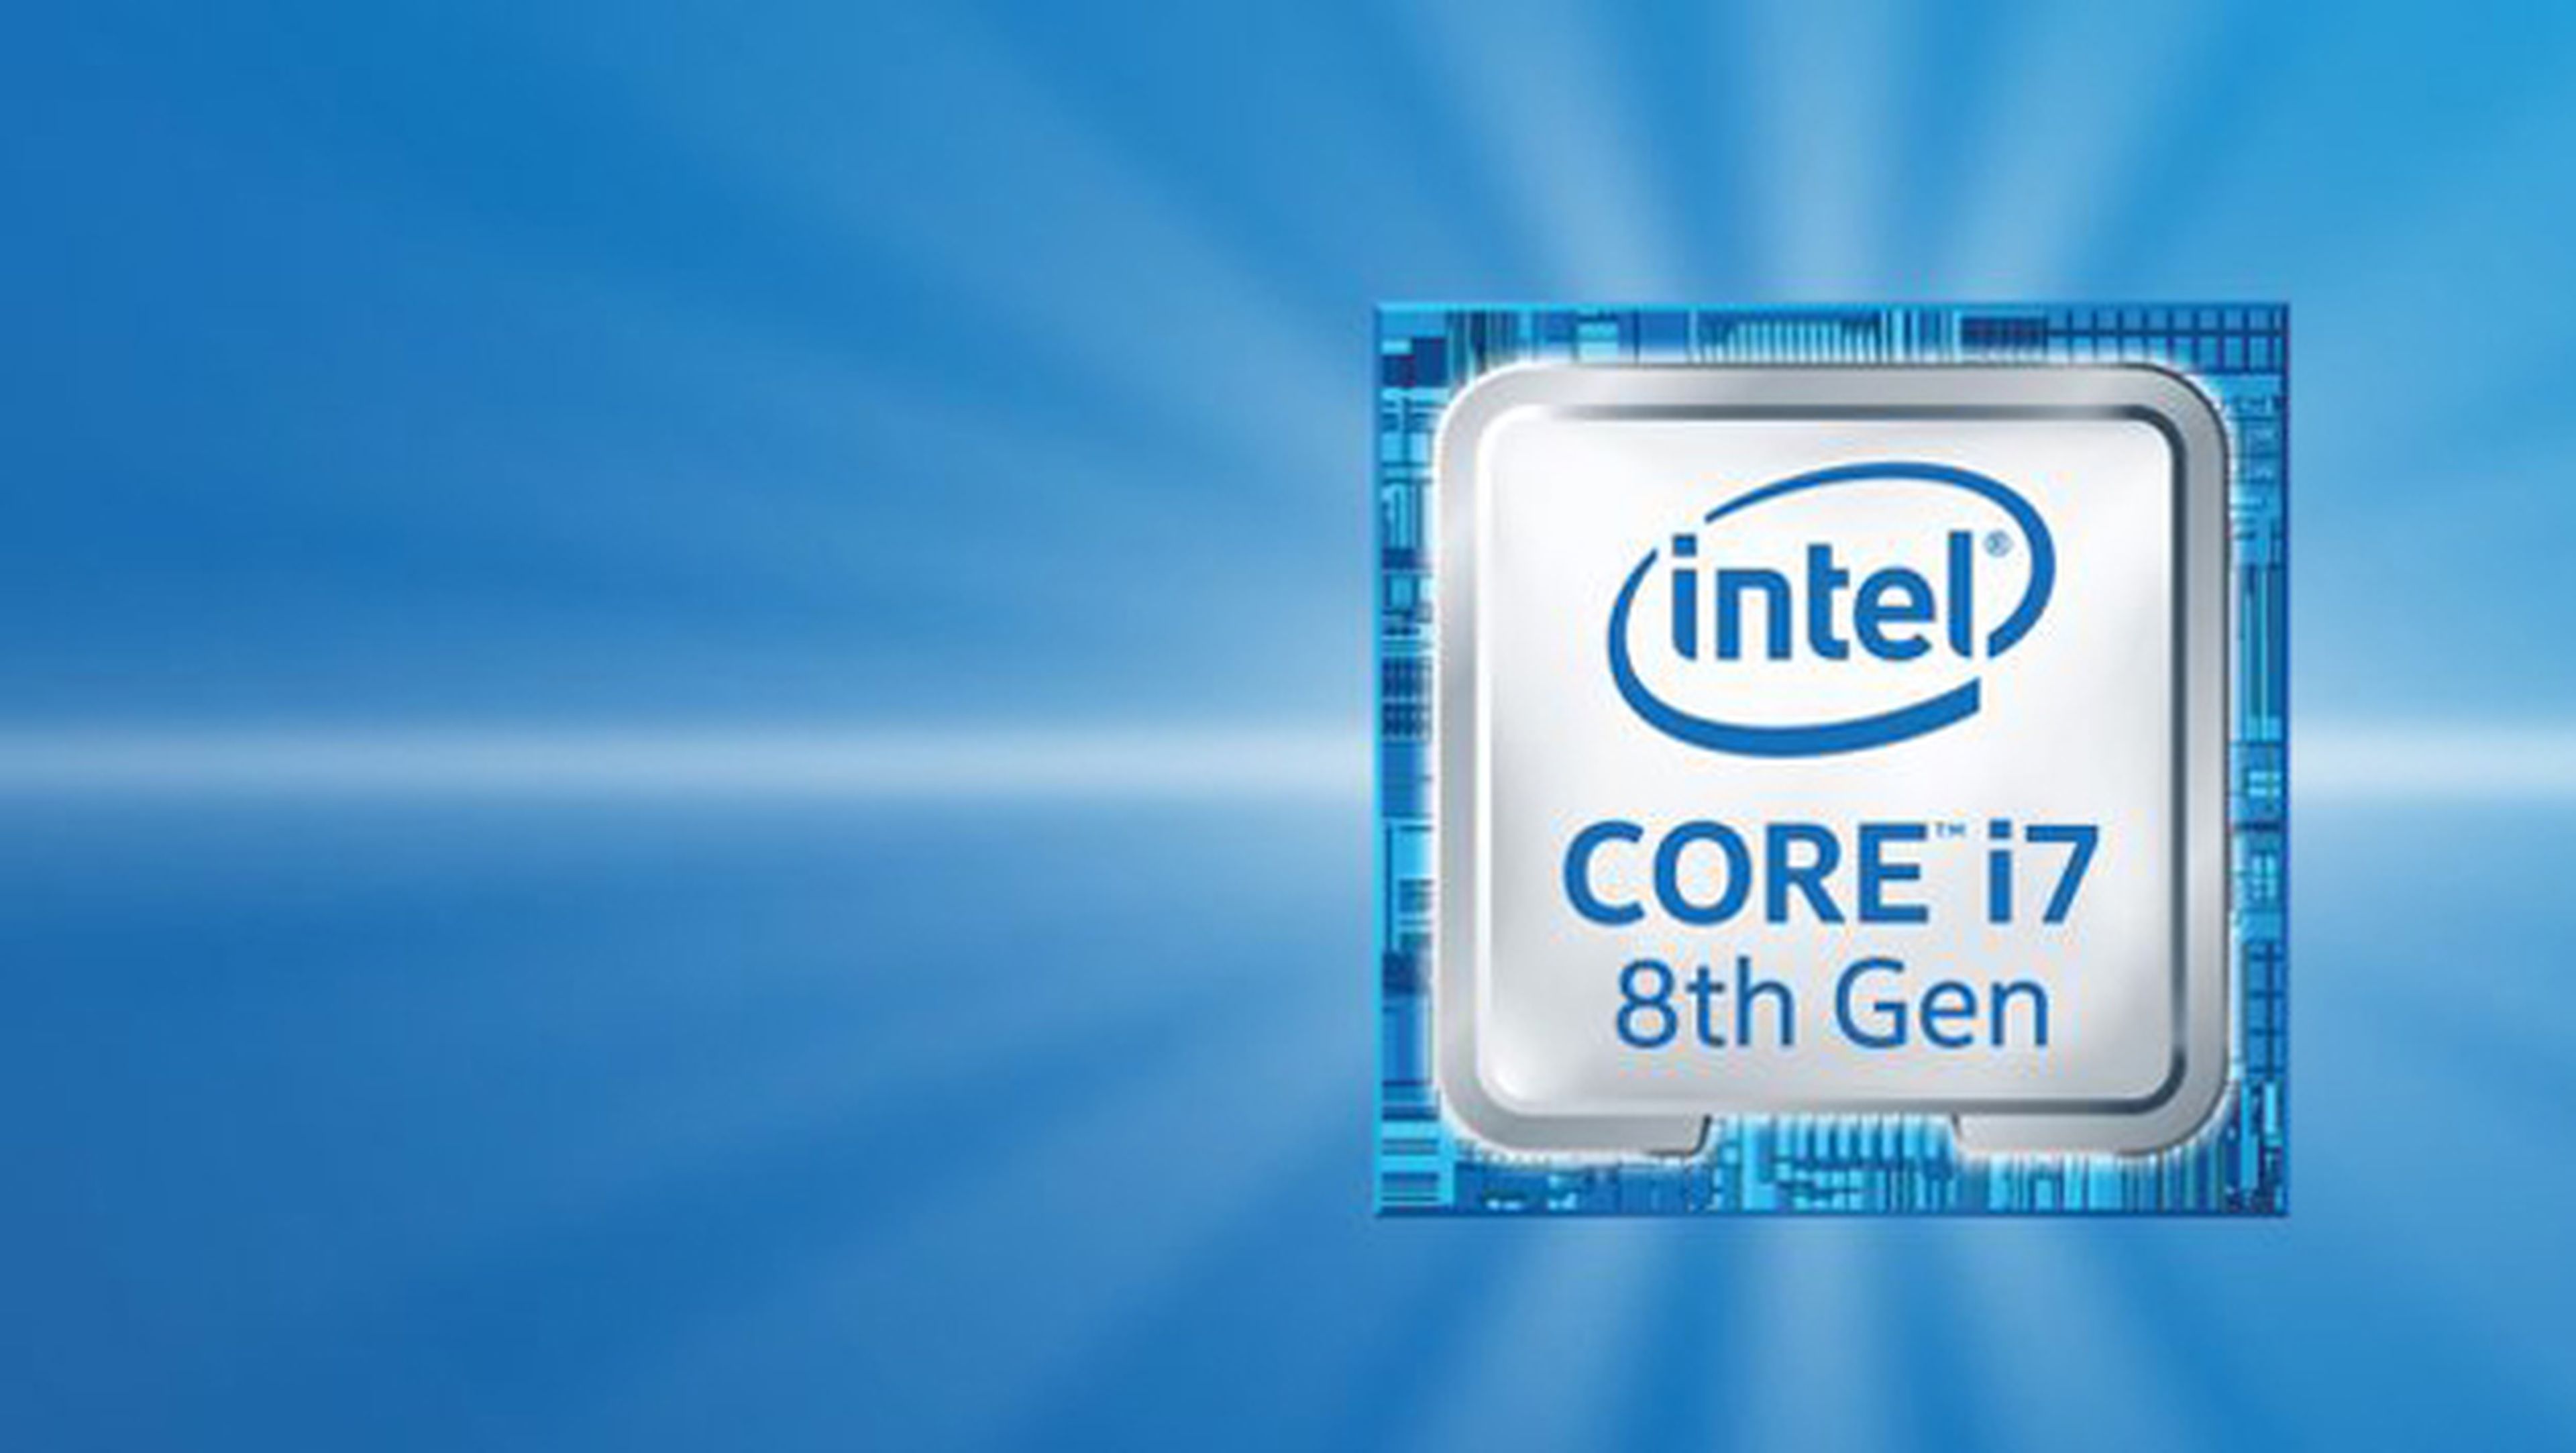 Intel оф сайт. Процессор 8 Gen Intel Core i7. Core i7-8650u. Intel Core i7 7 Gen. Кристалл процессора Intel Core i7.